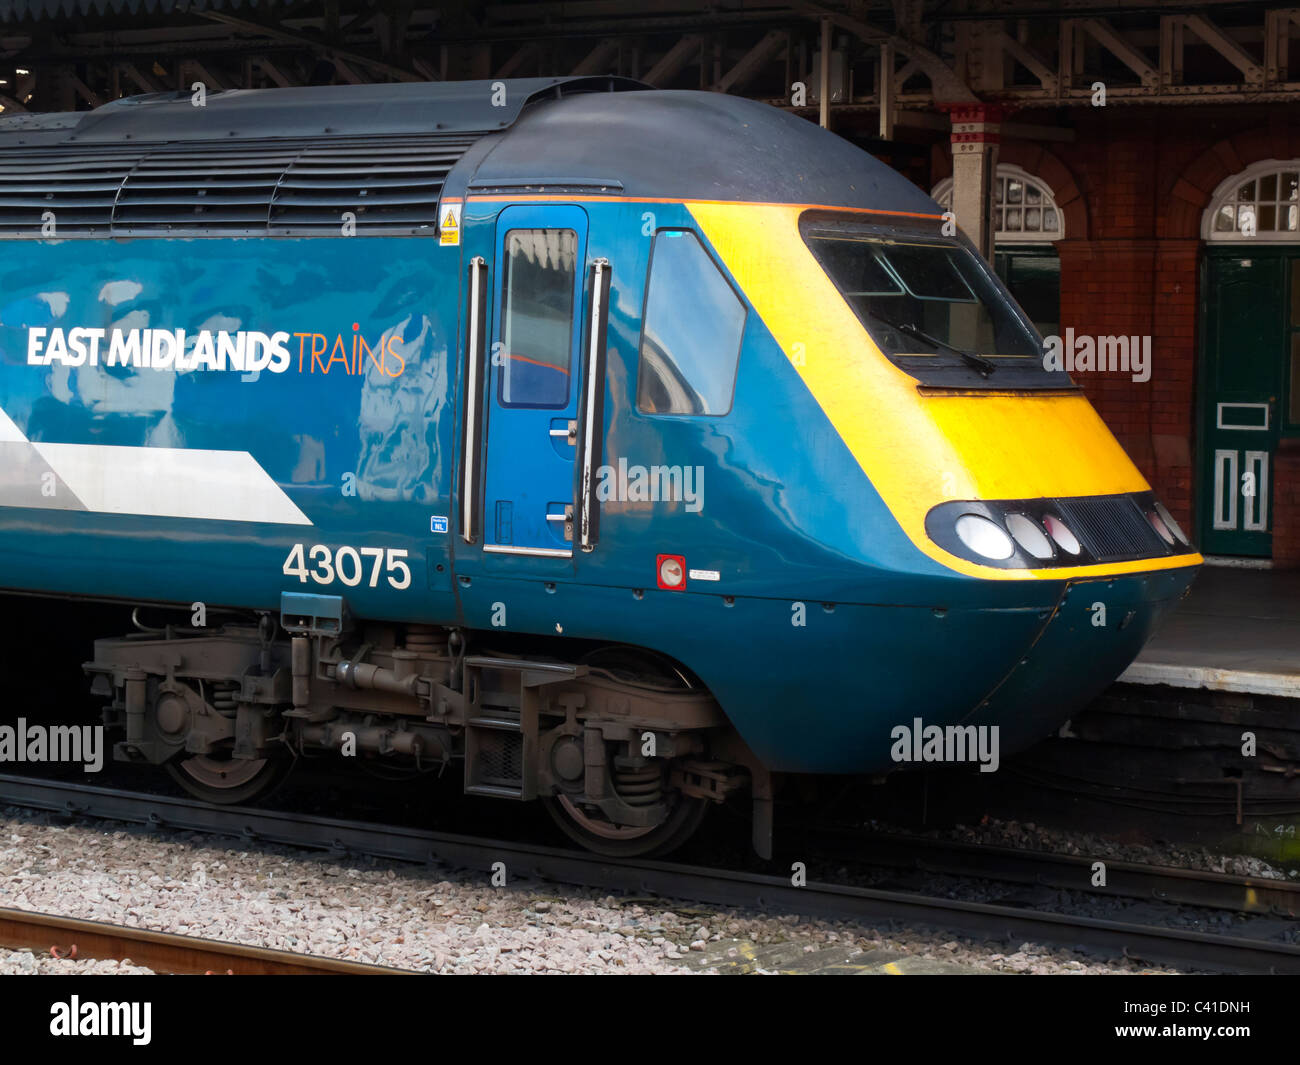 East Midlands Trains Inter City 125 diesel locomotive train at Nottingham Railway Station England UK Stock Photo